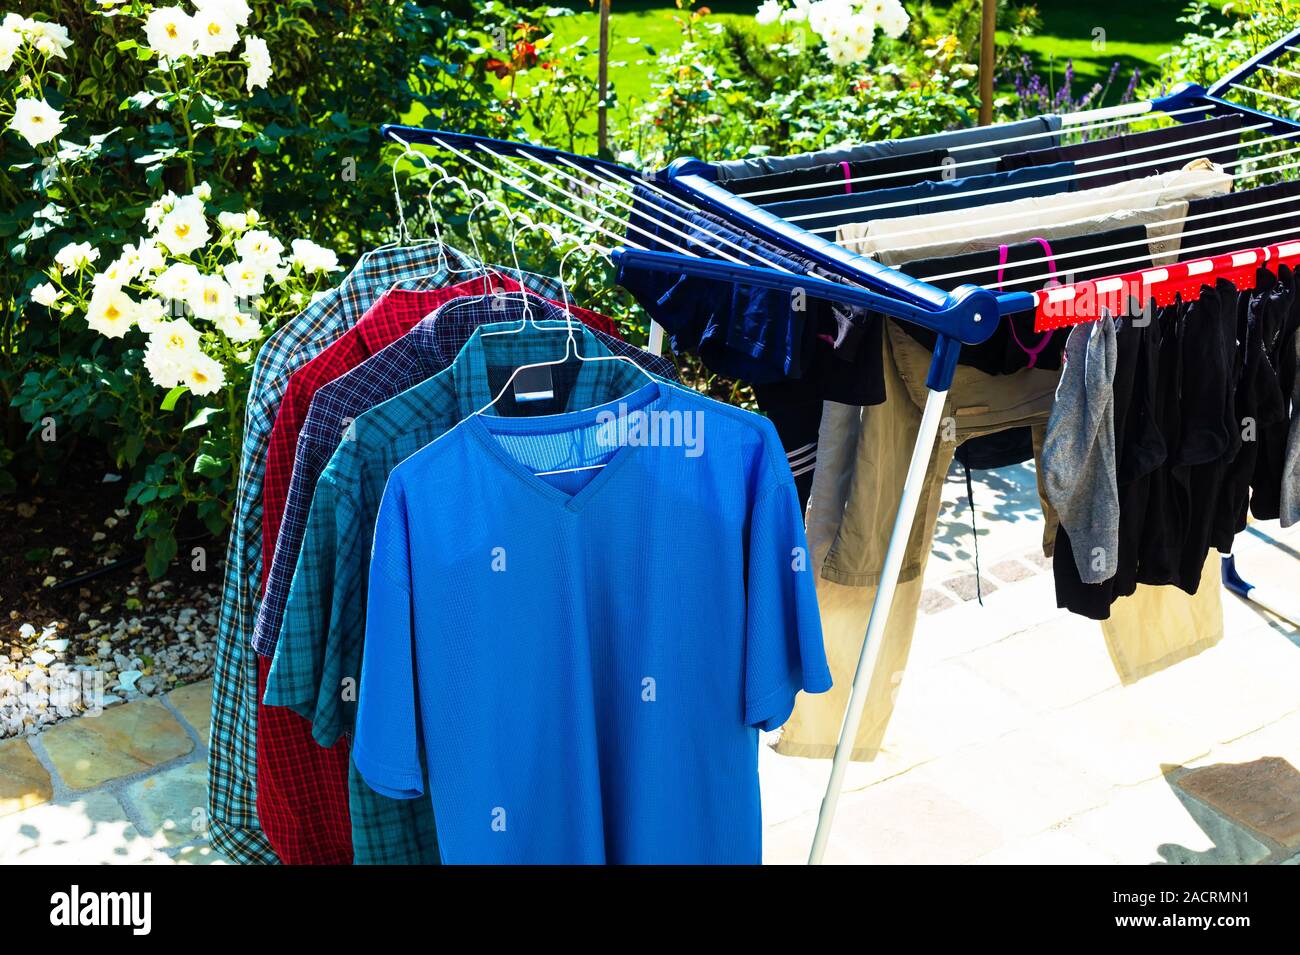 clothes horse Stock Photo